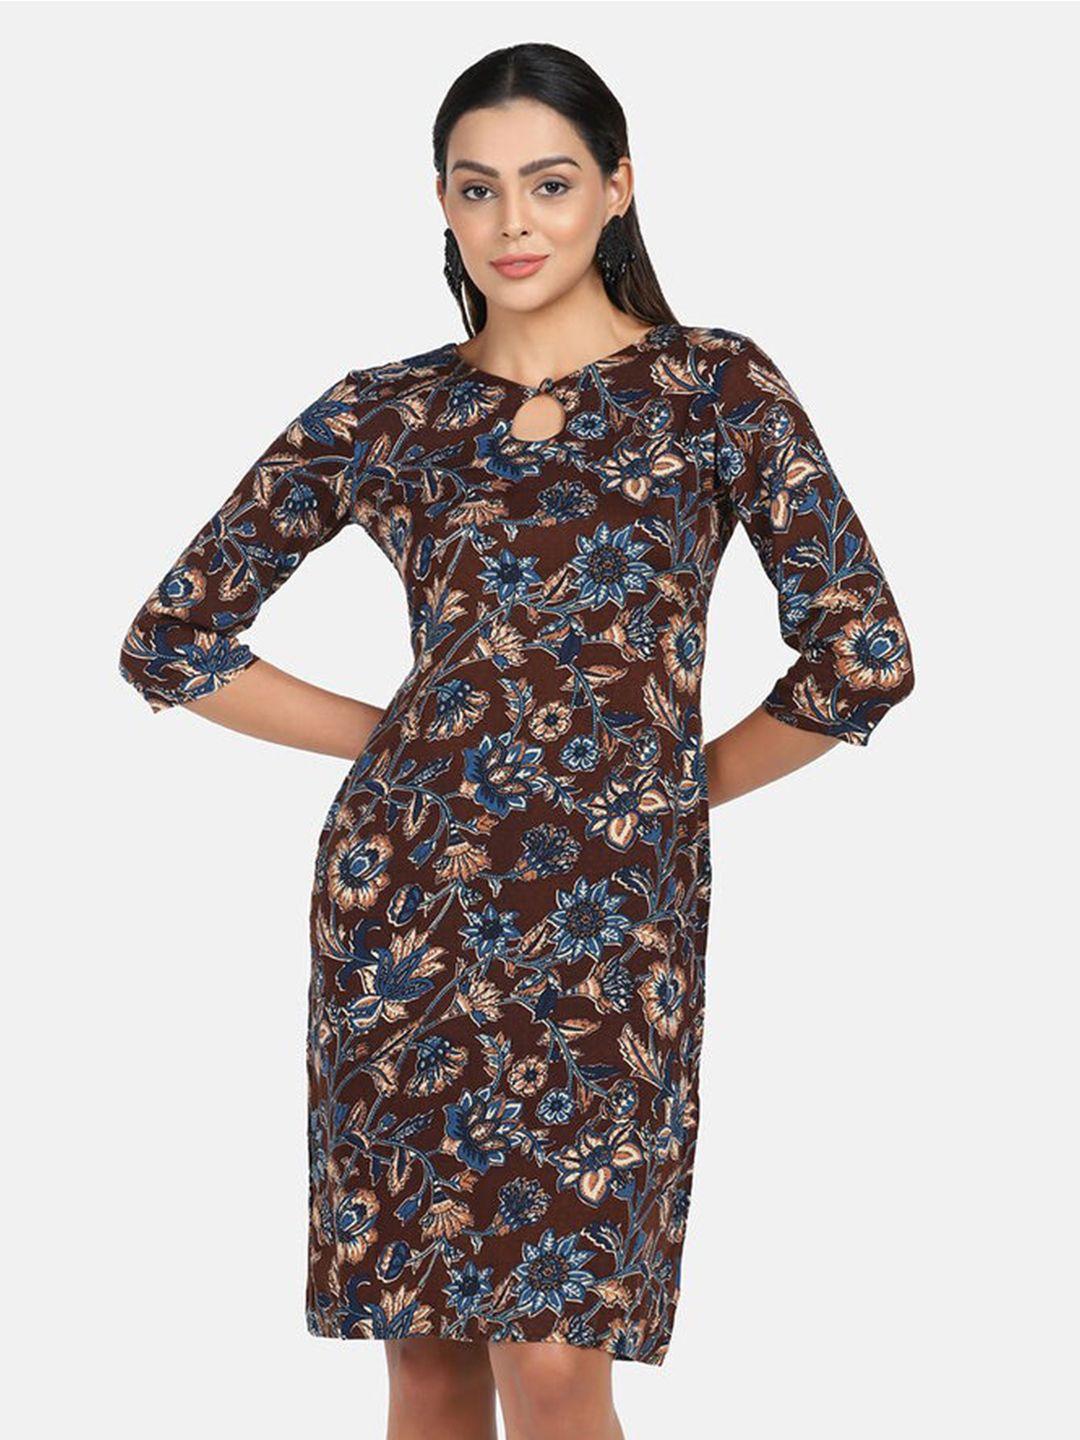 powersutra brown & blue floral cotton sheath dress